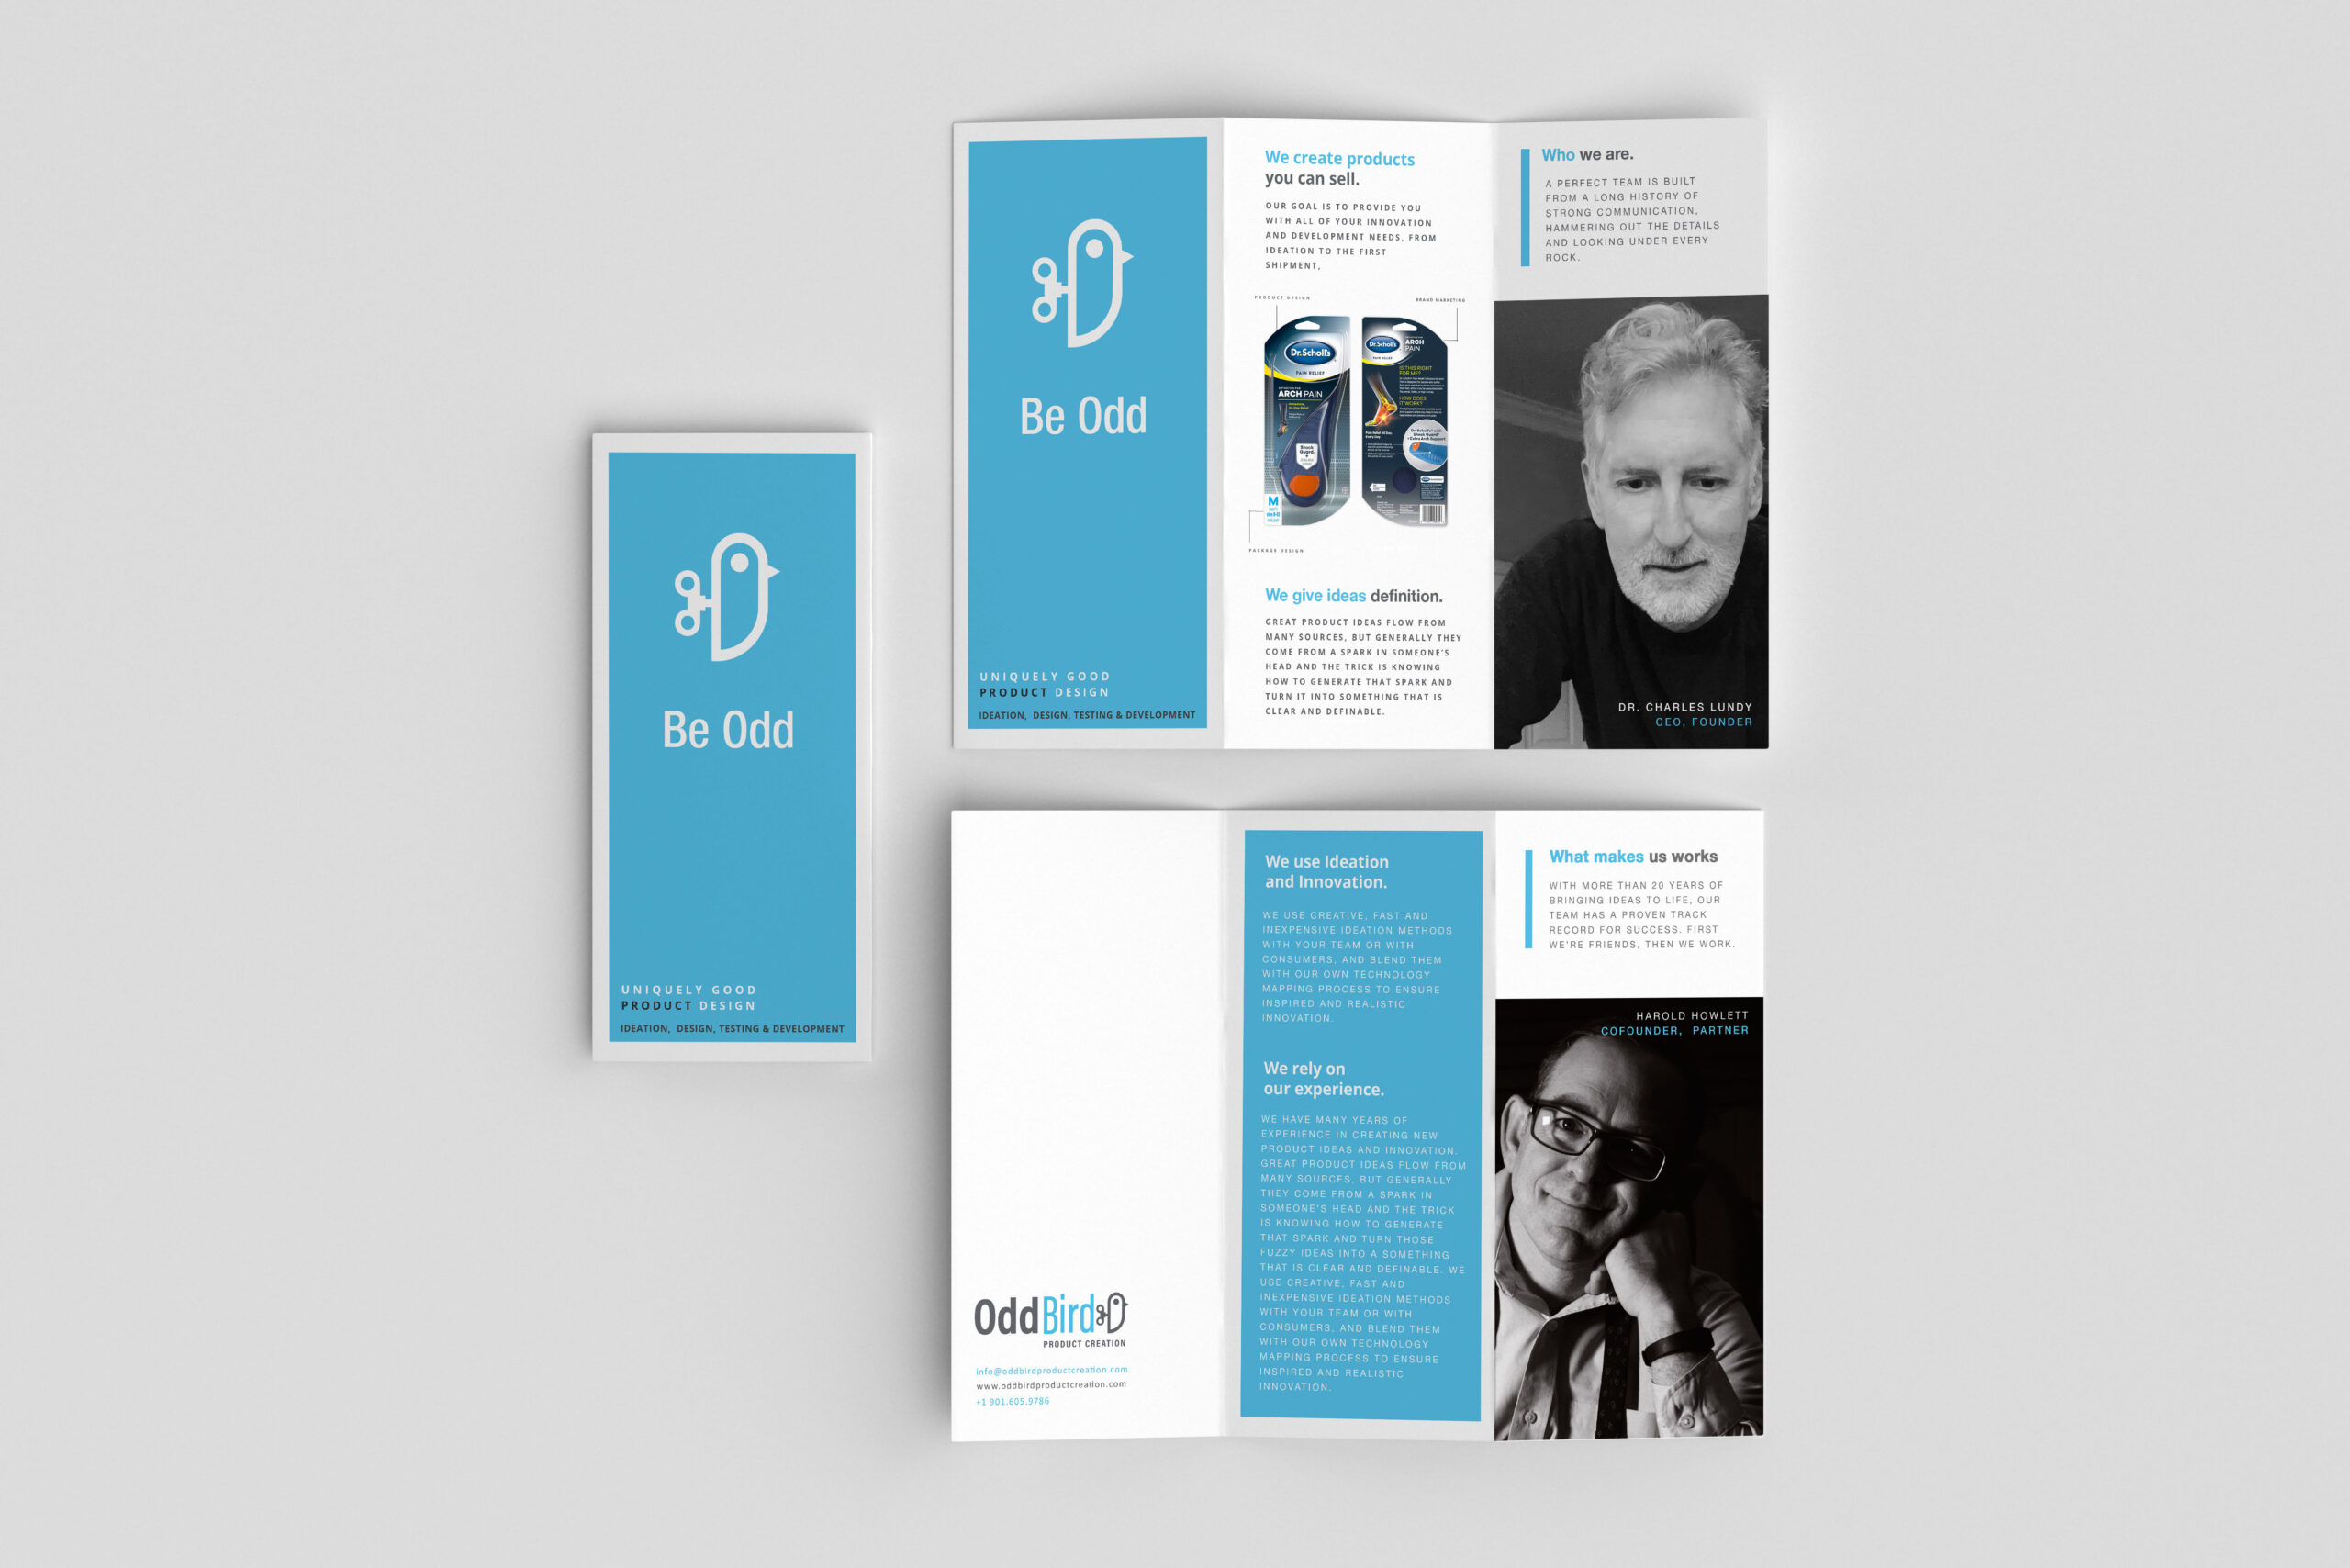 Oddbird tri-fold marketing brochure